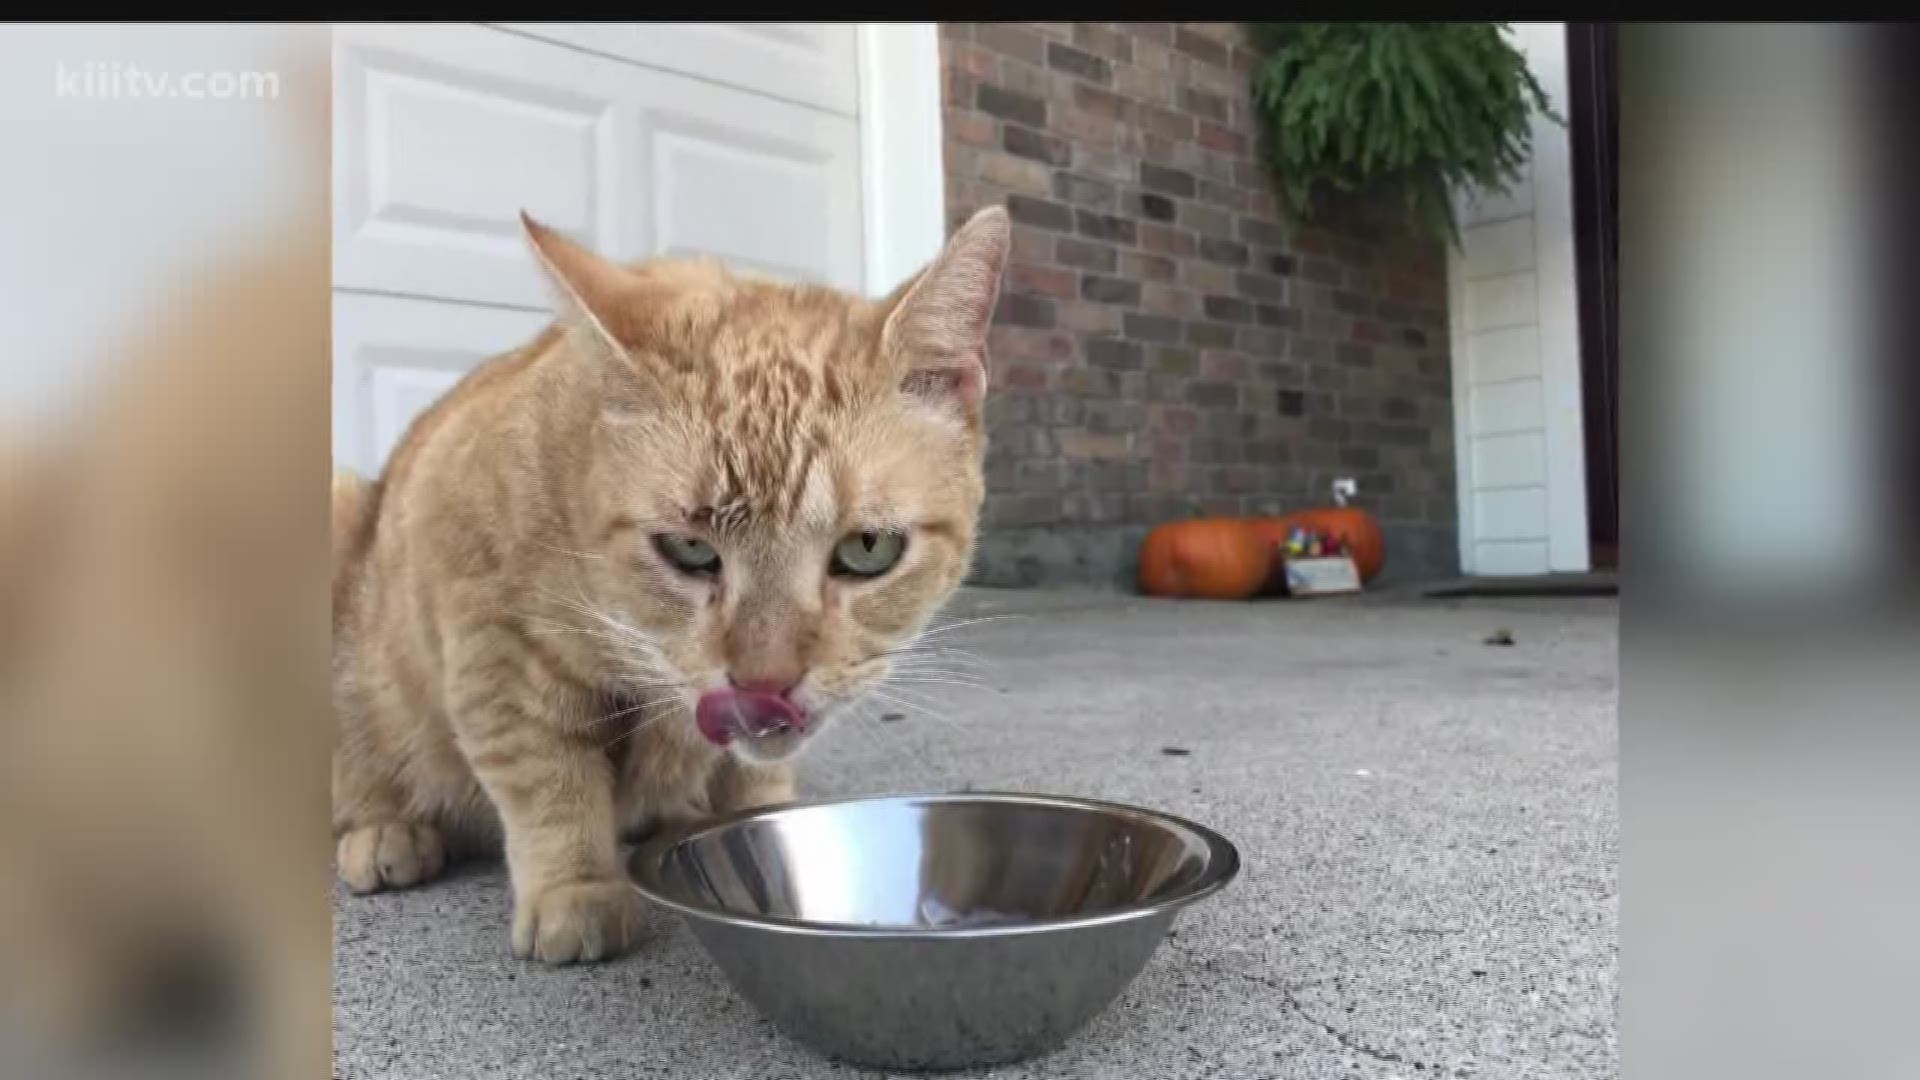 PAAC's 'TrapNeuterReturn' program battles stray cat problem